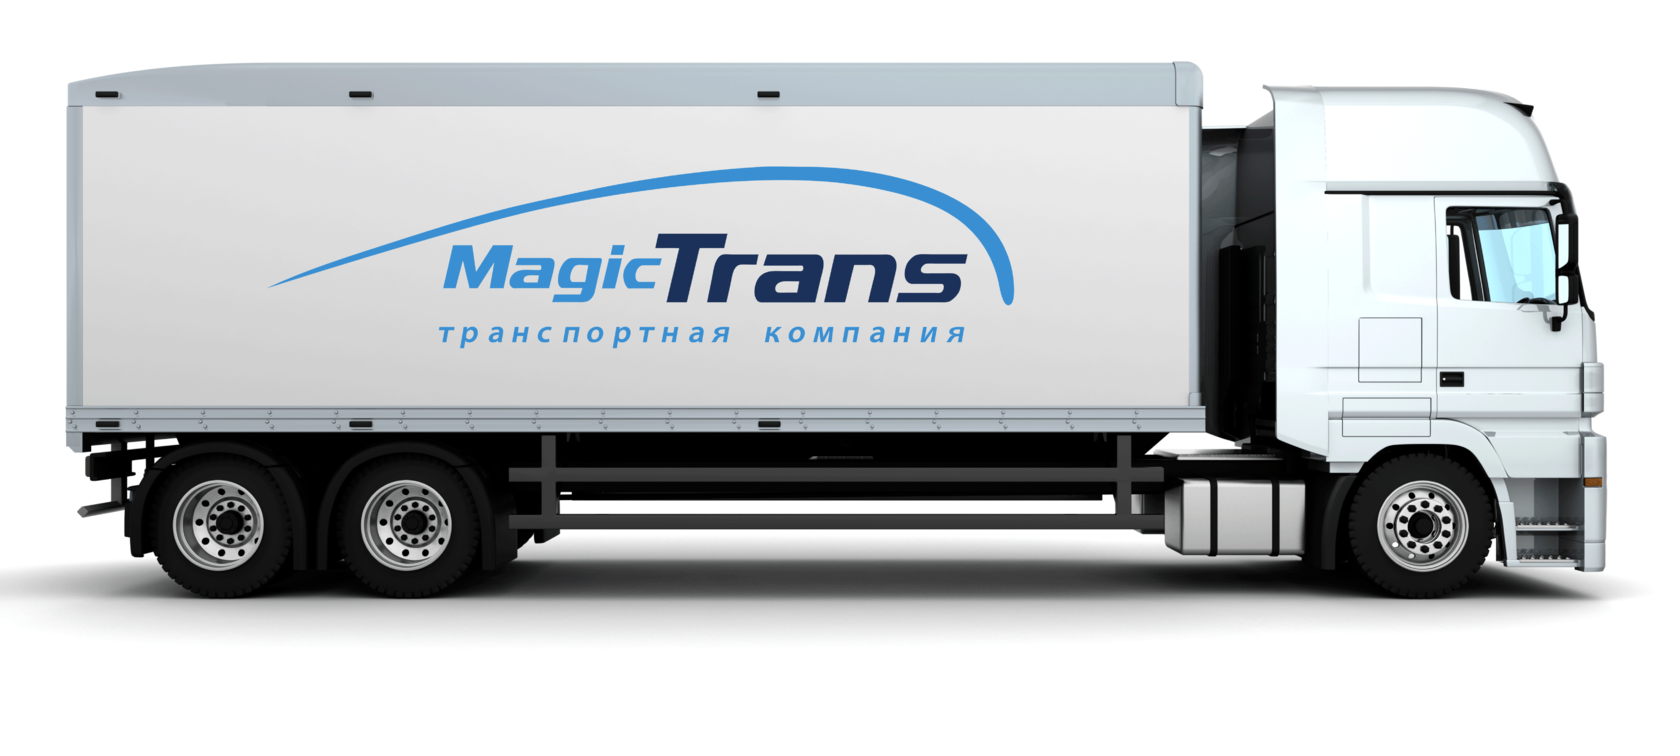 Мейджик транс транспортная компания. Мейджик транс транспортная компания лого. ТК Мейджик транс логотип. Фуры компании Magic Trans.